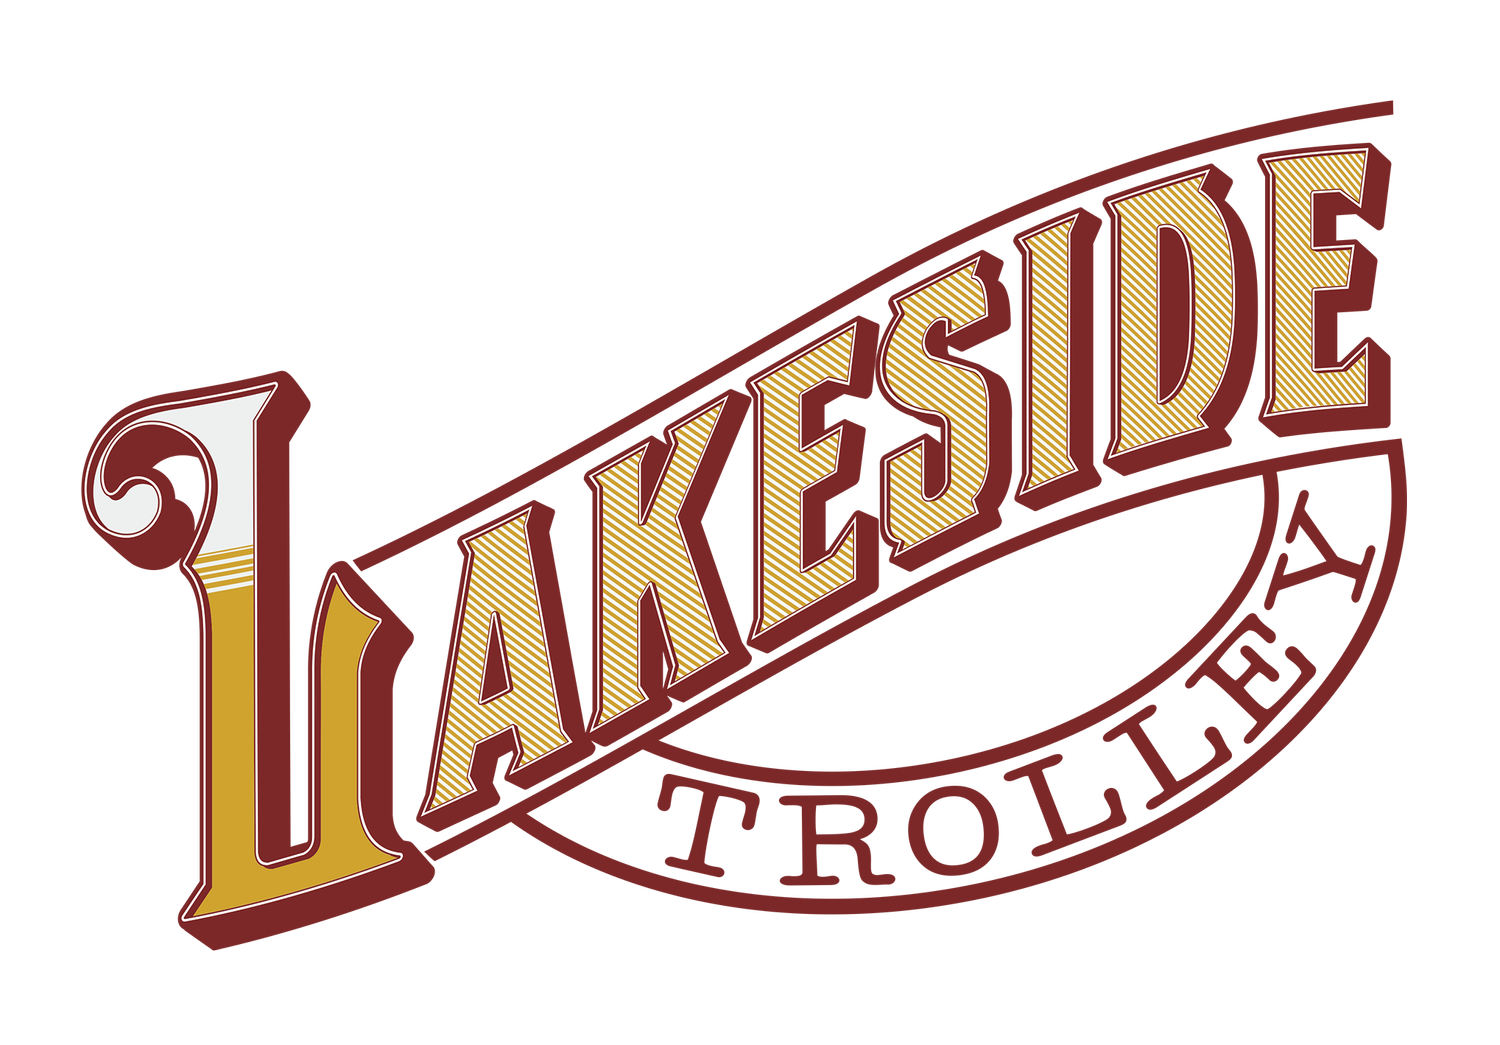 Lakeside Trolley